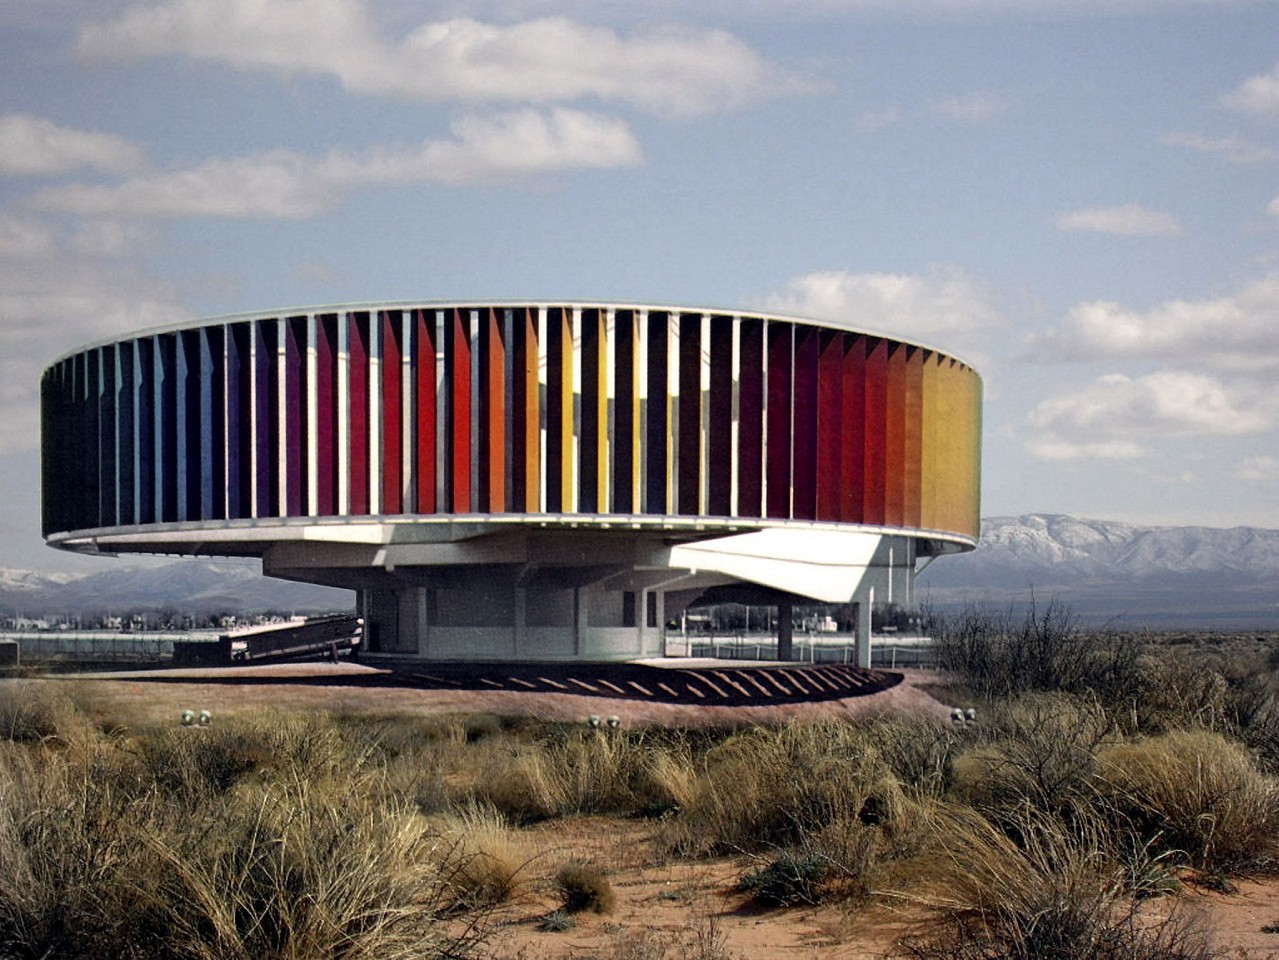 Oliver Wasow, Color Wheel House
2012, Archival inkjet